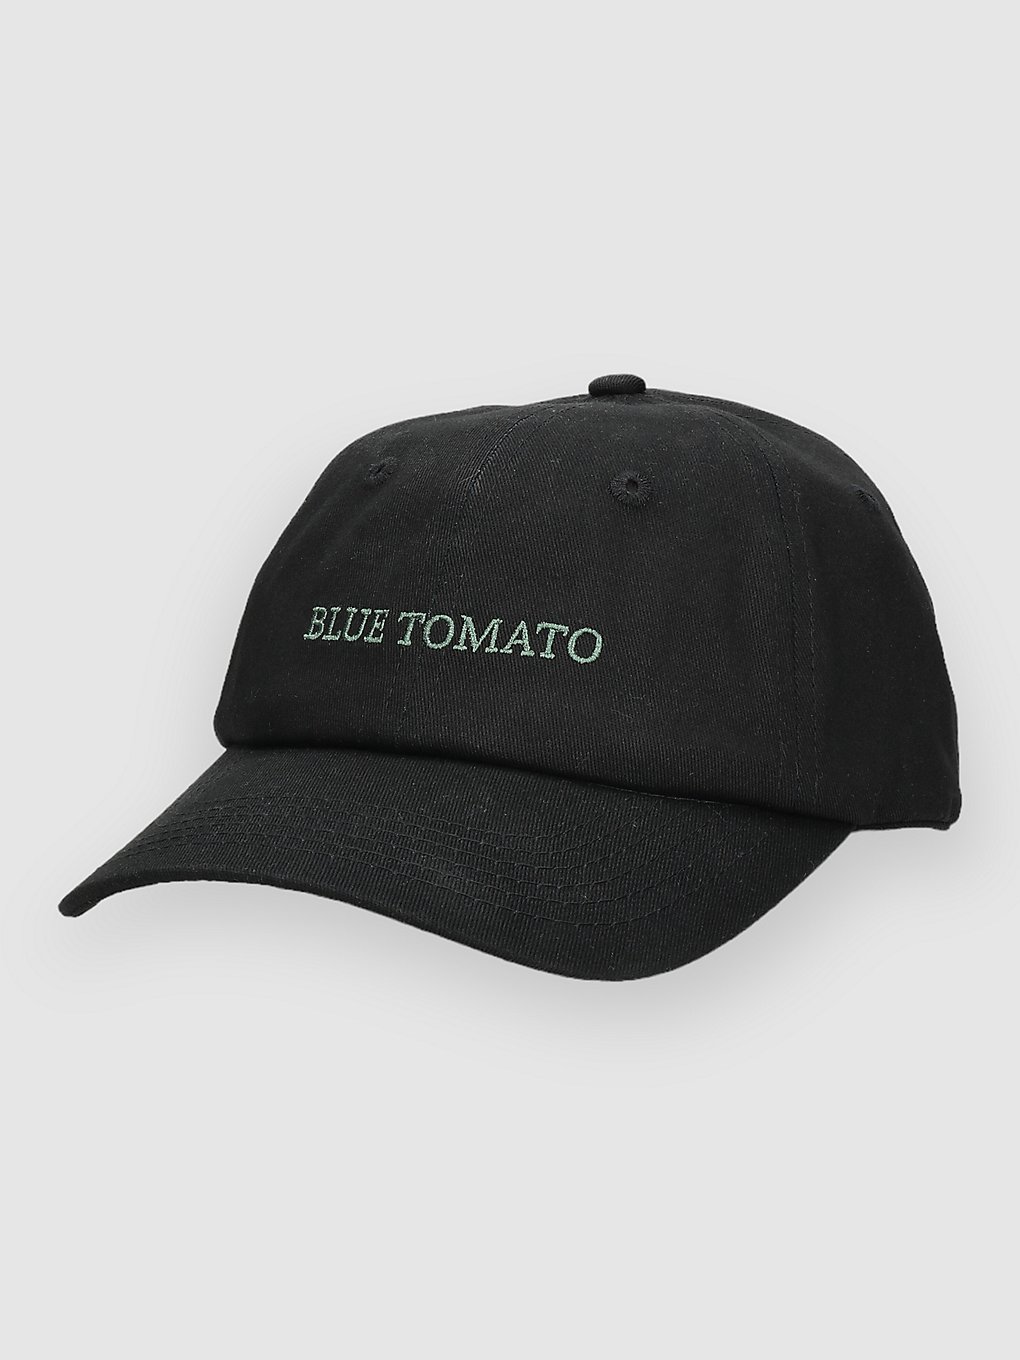 Blue Tomato Dad Cap black kaufen